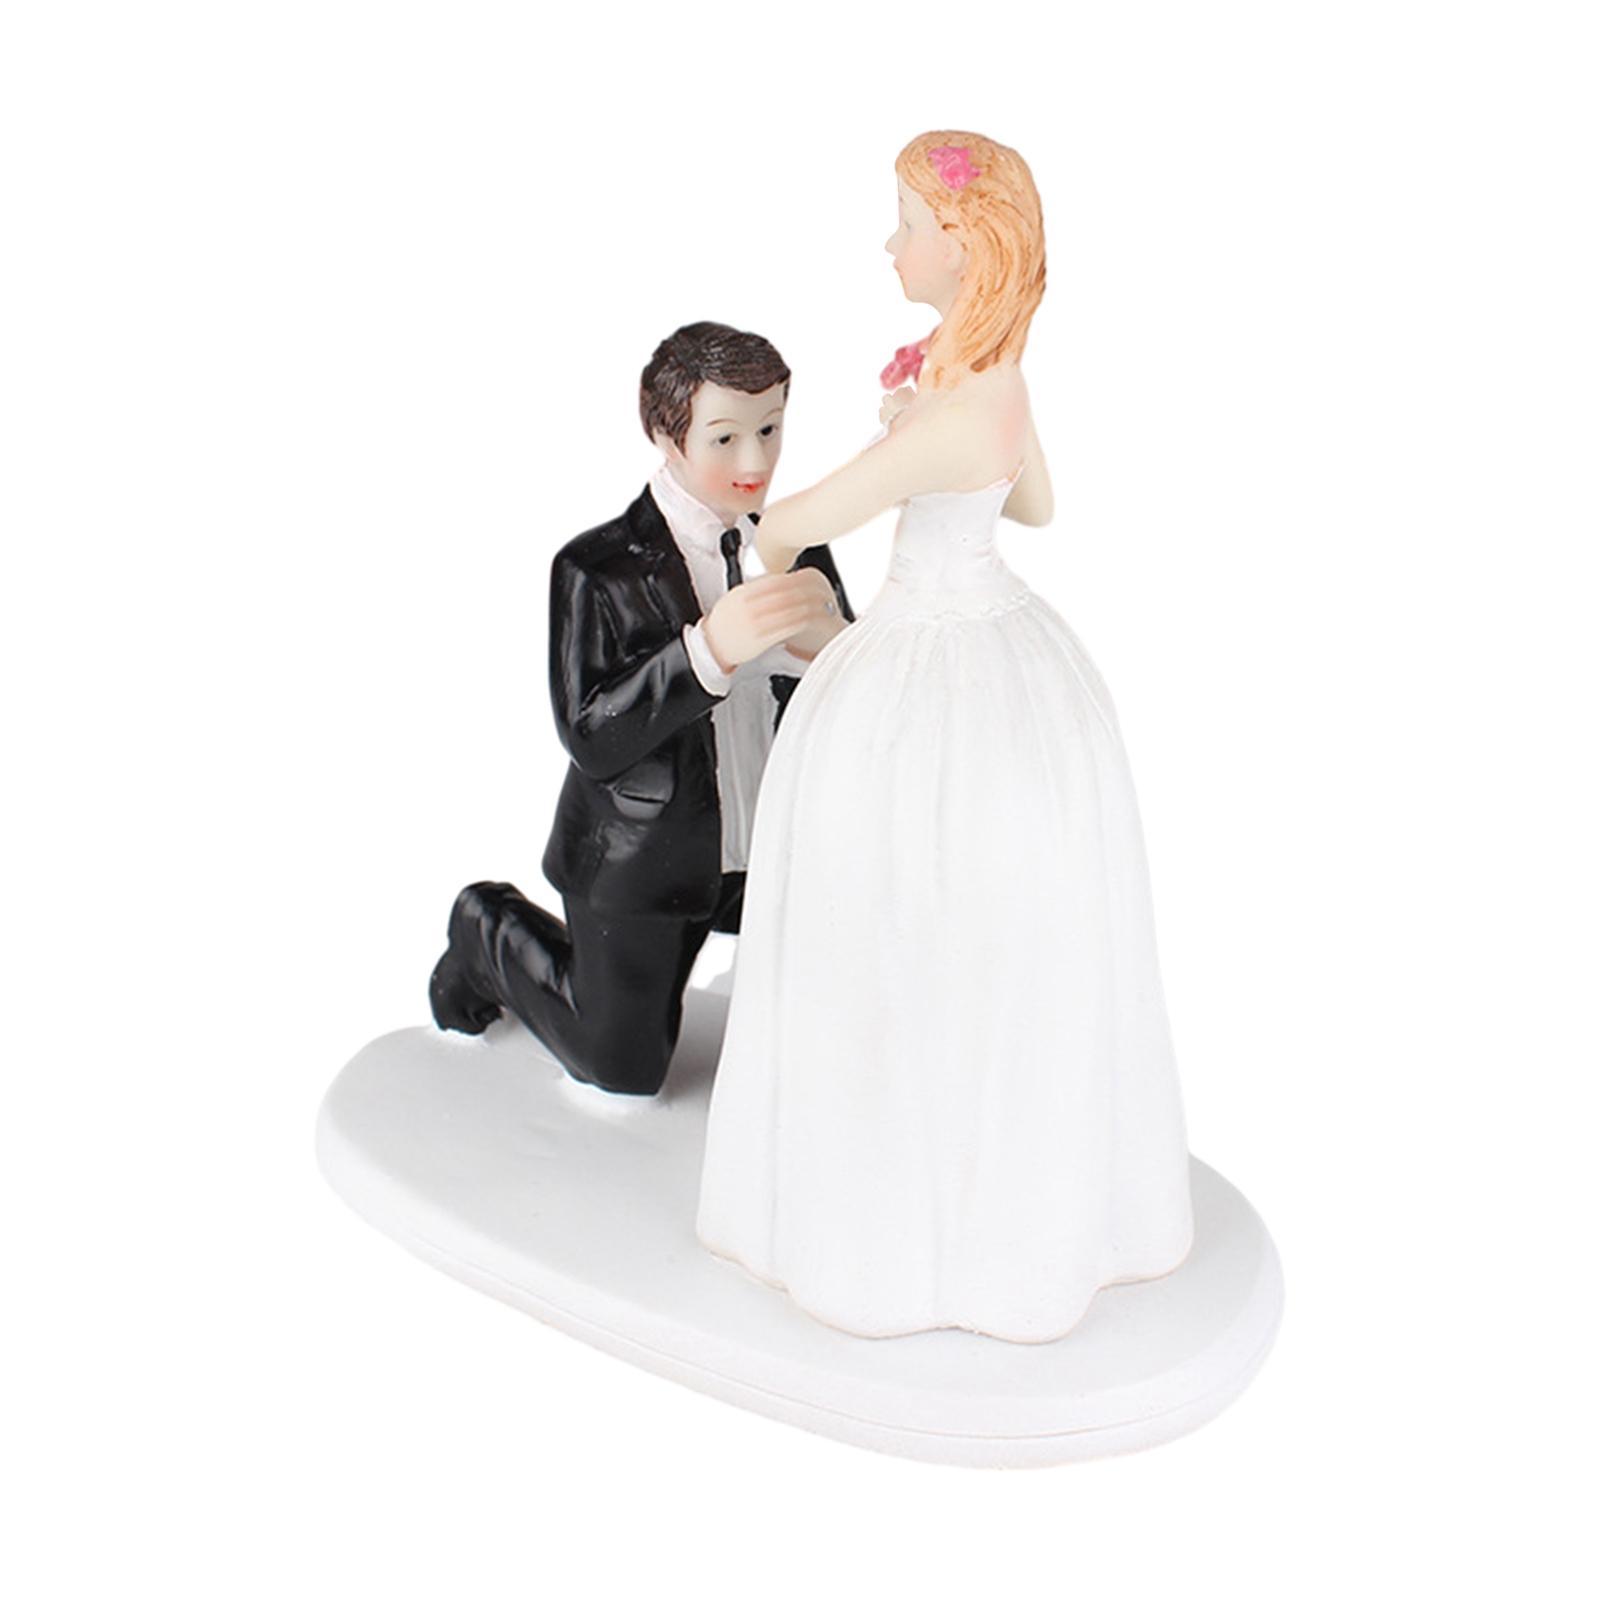 Rustic Wedding Cake Topper Bride and Groom Figurines Keepsake Cake Decoration Ornament Wedding Cake Dolls Topper for Birthday